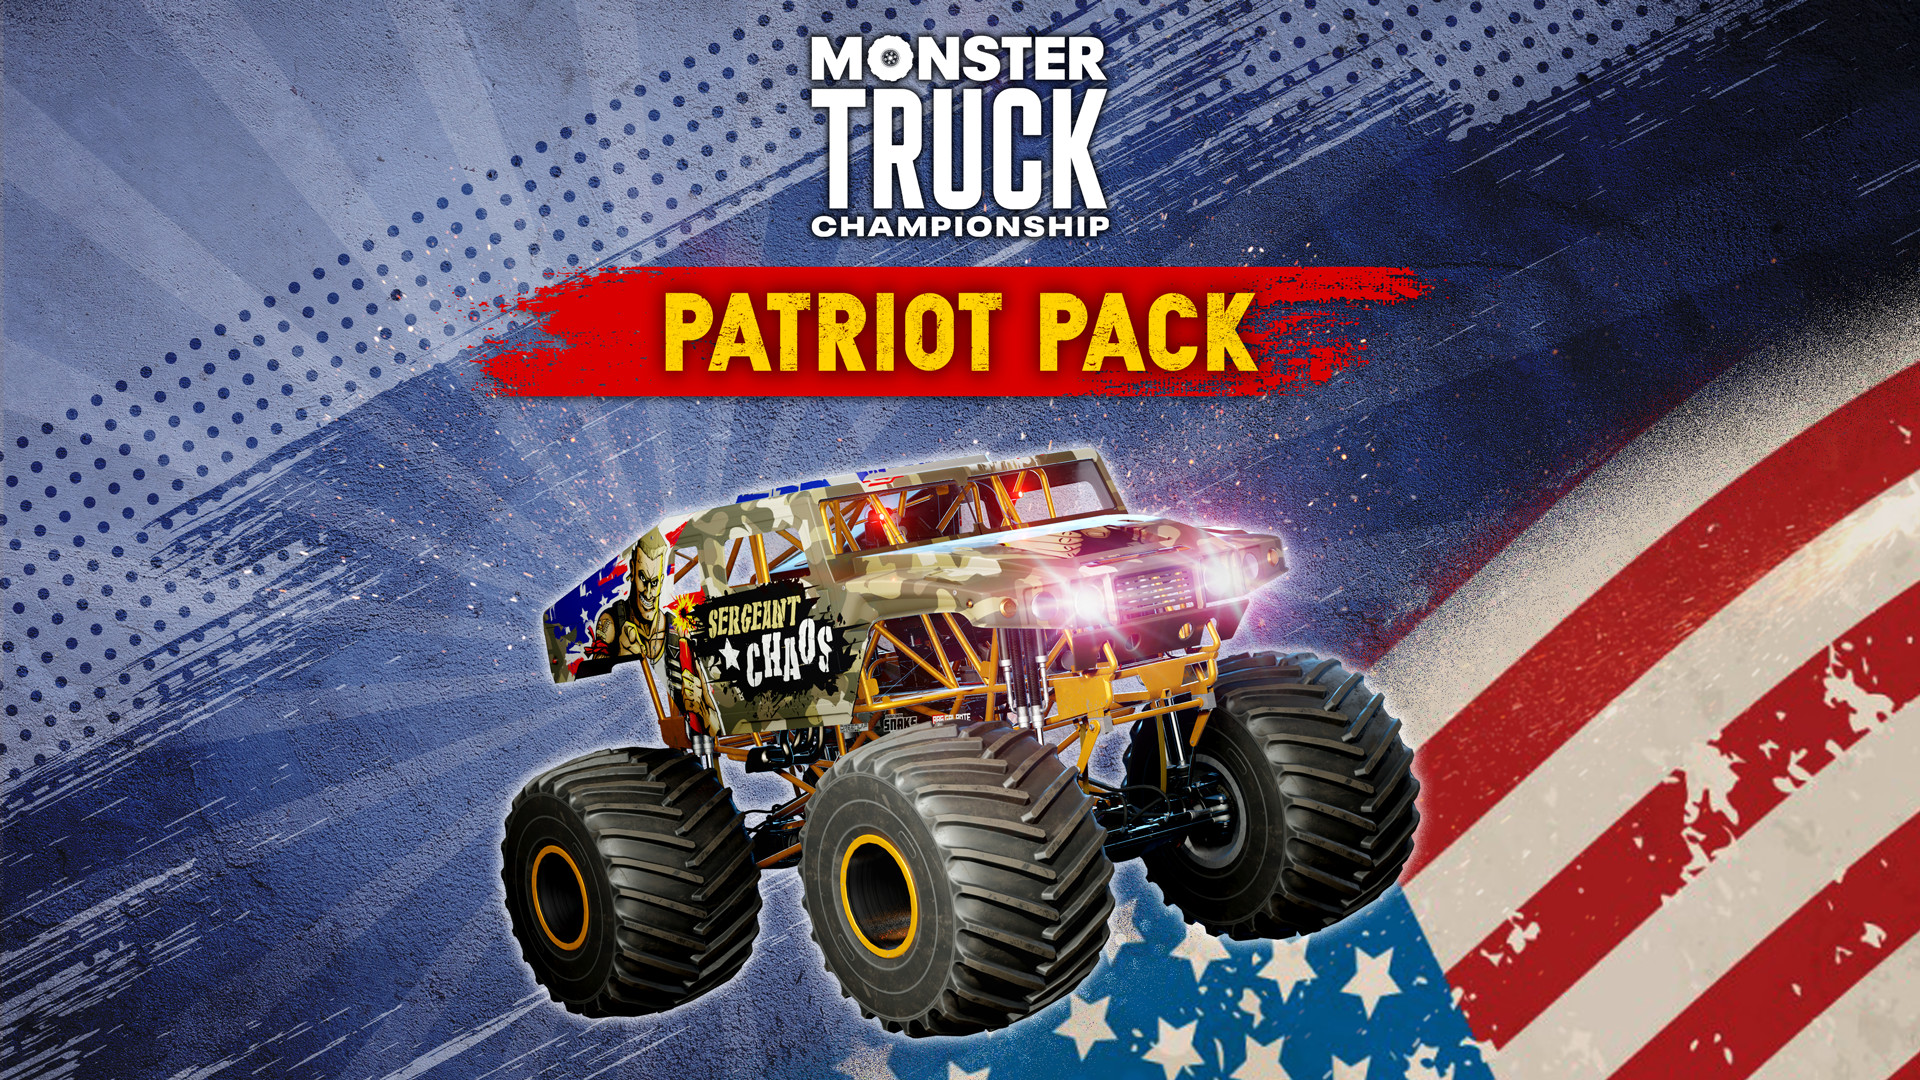 [$ 3.21] Monster Truck Championship - Patriot Pack DLC Steam CD Key